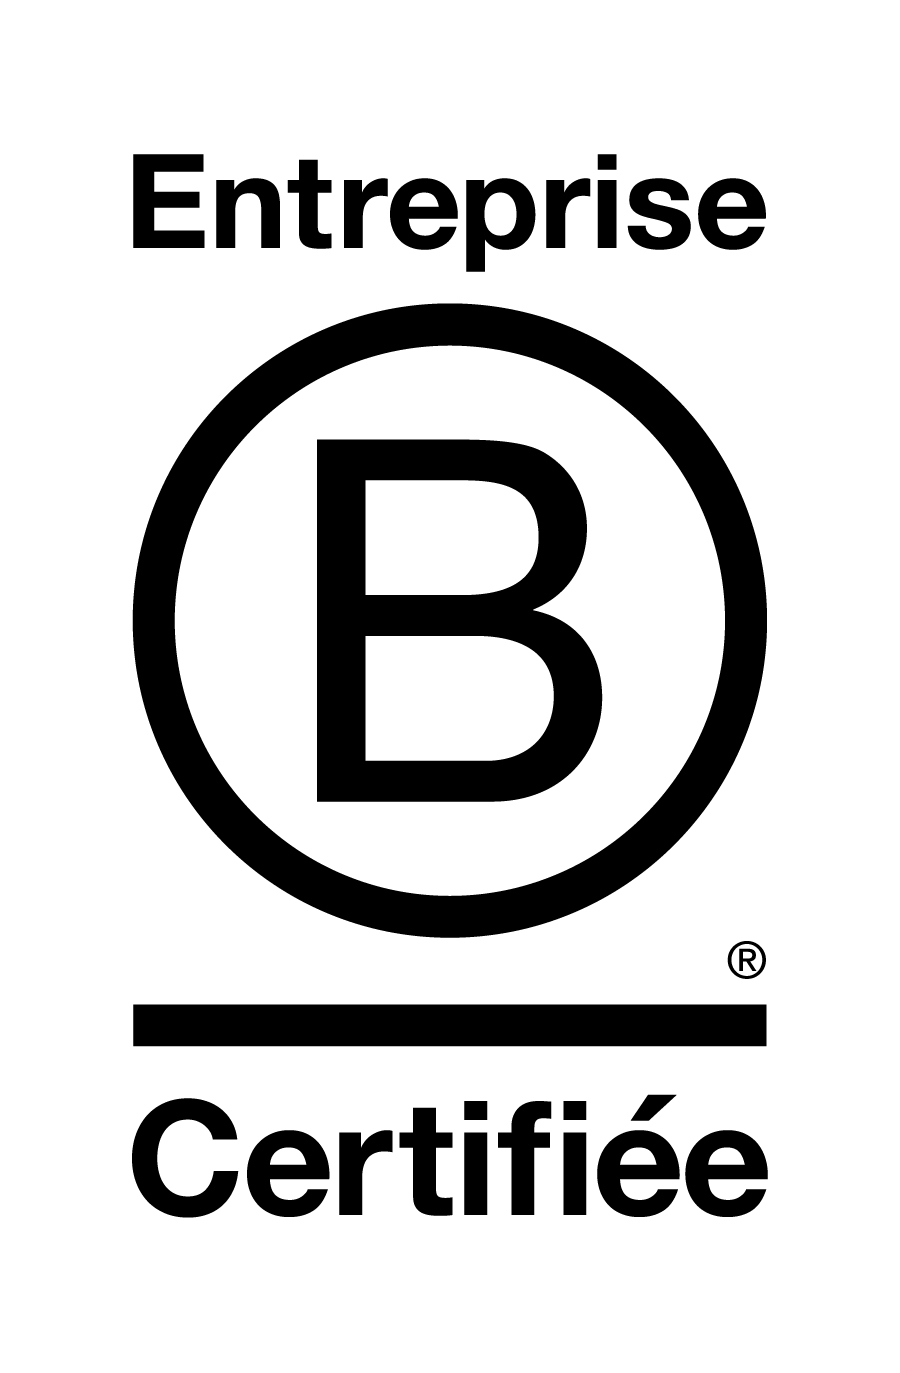 2018 certifee b logo black l